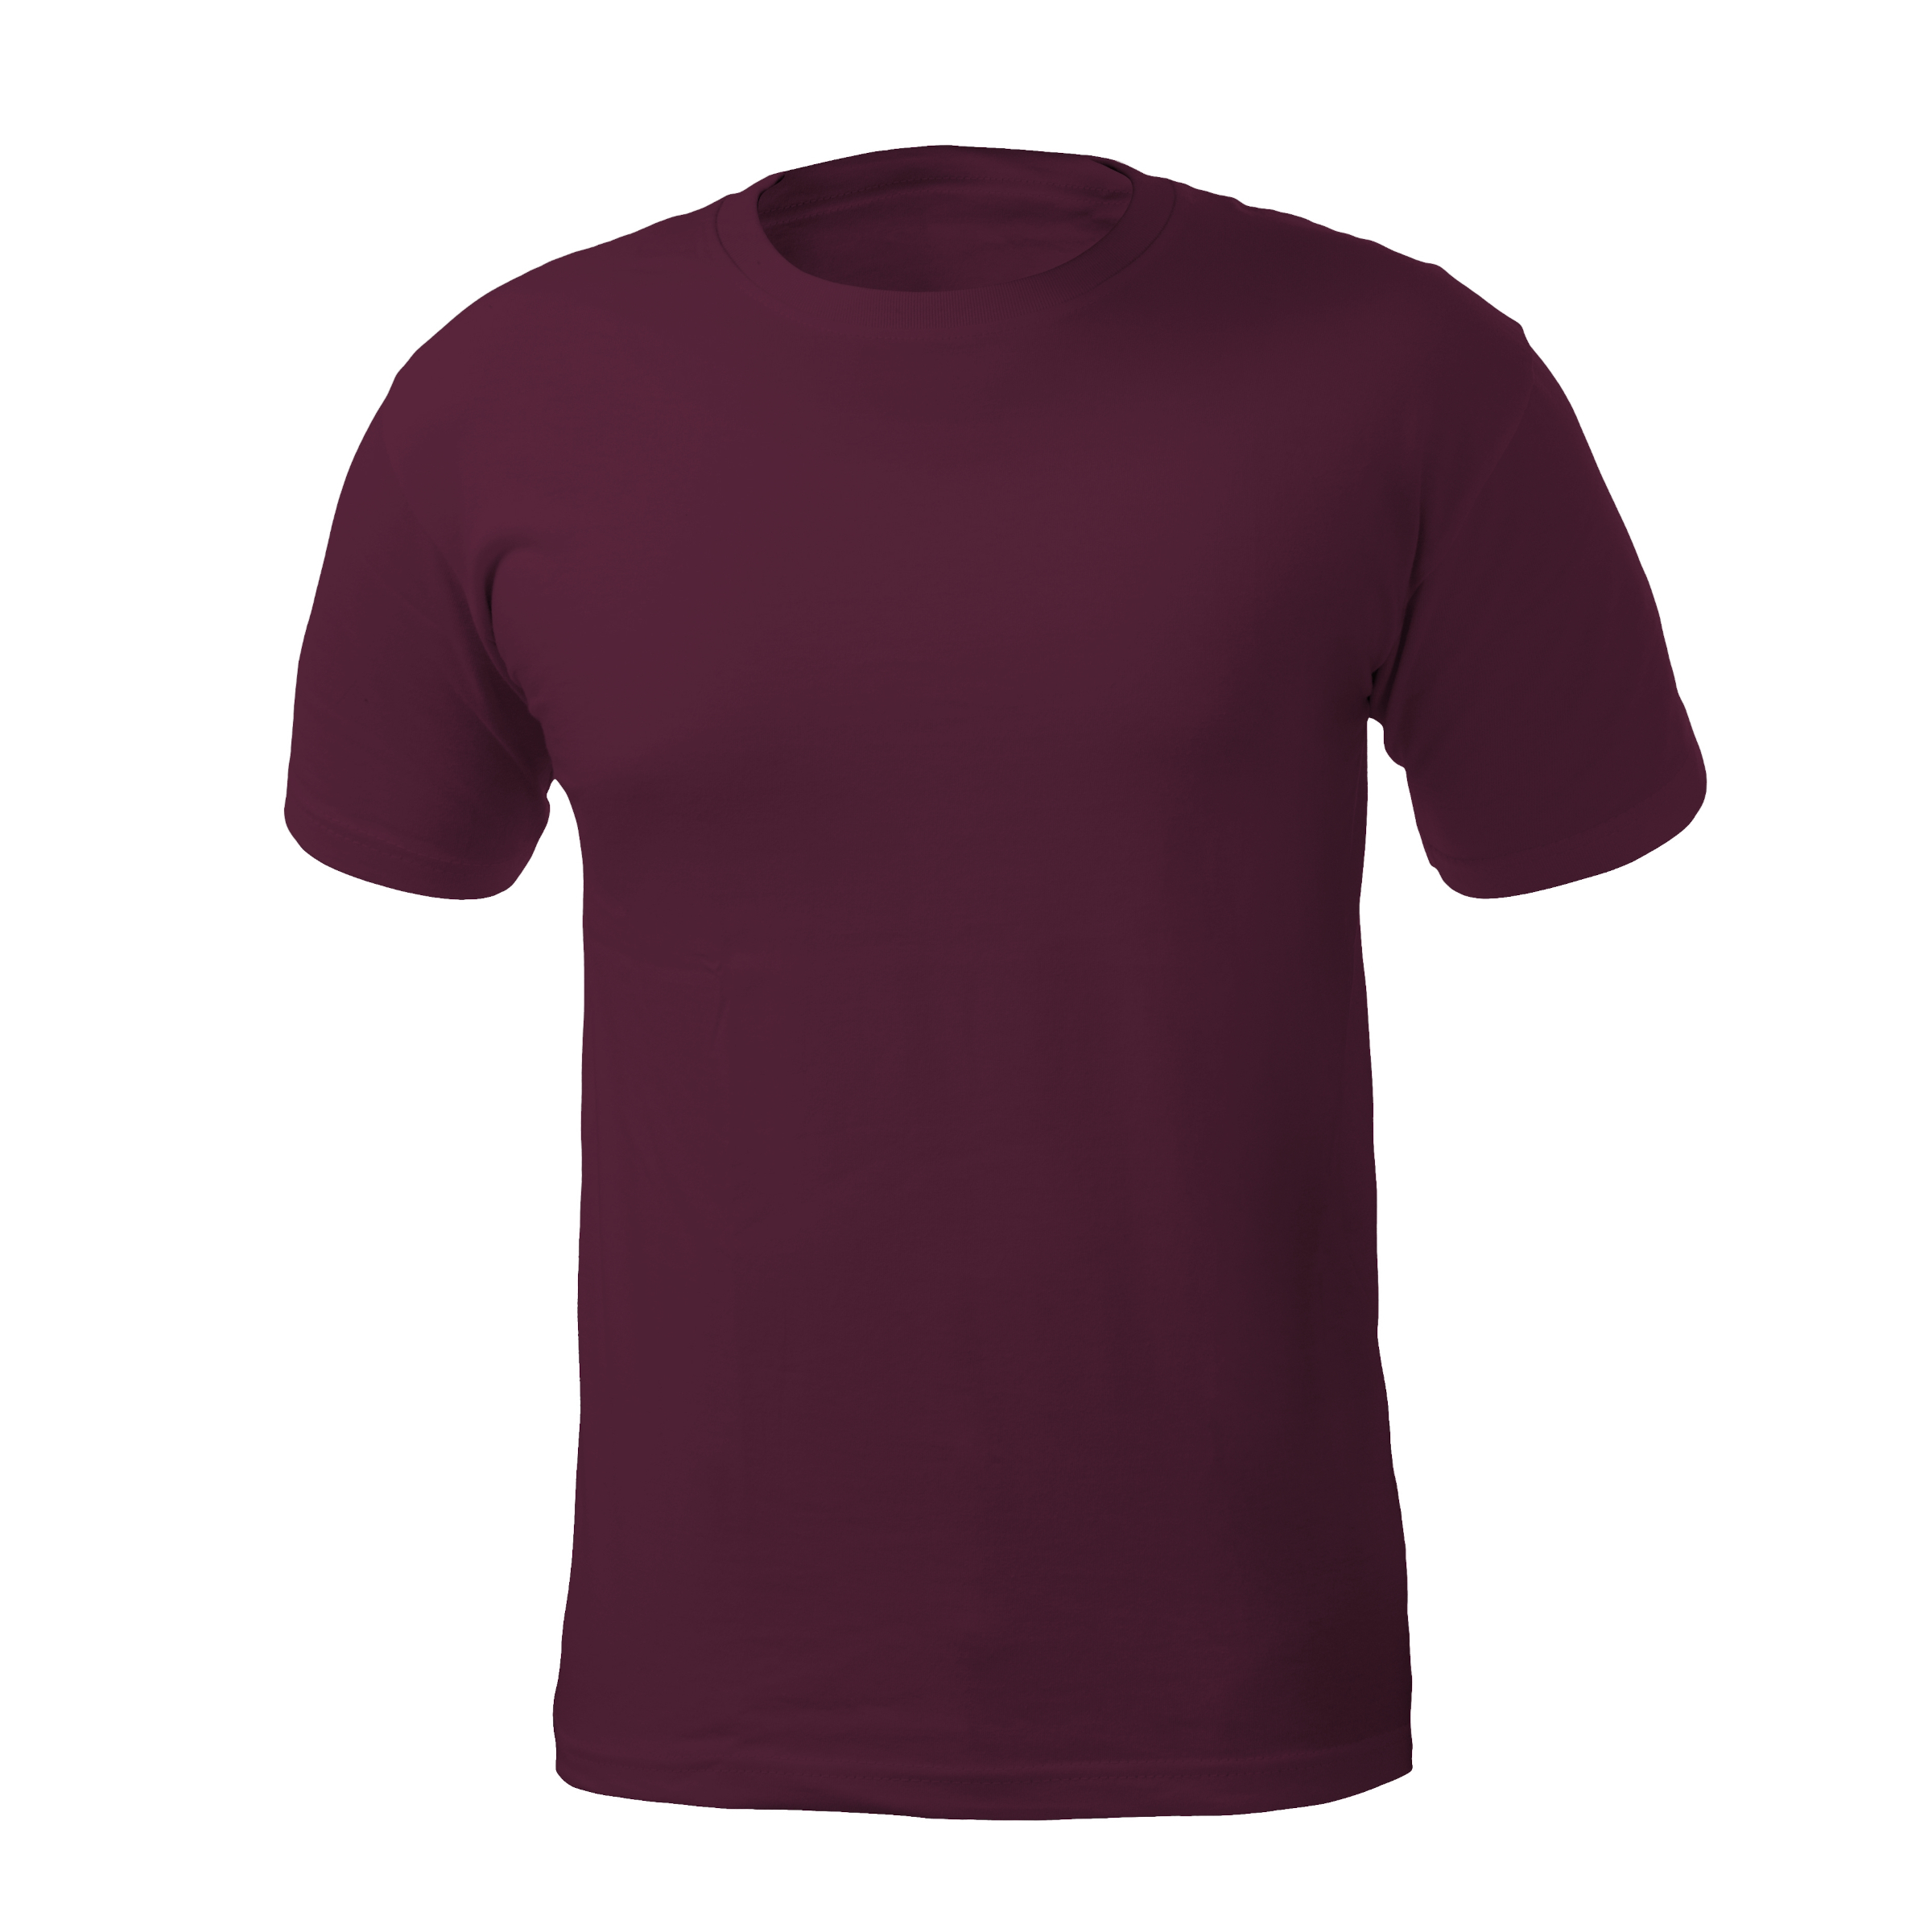 Premium T-Shirt Herren farbig